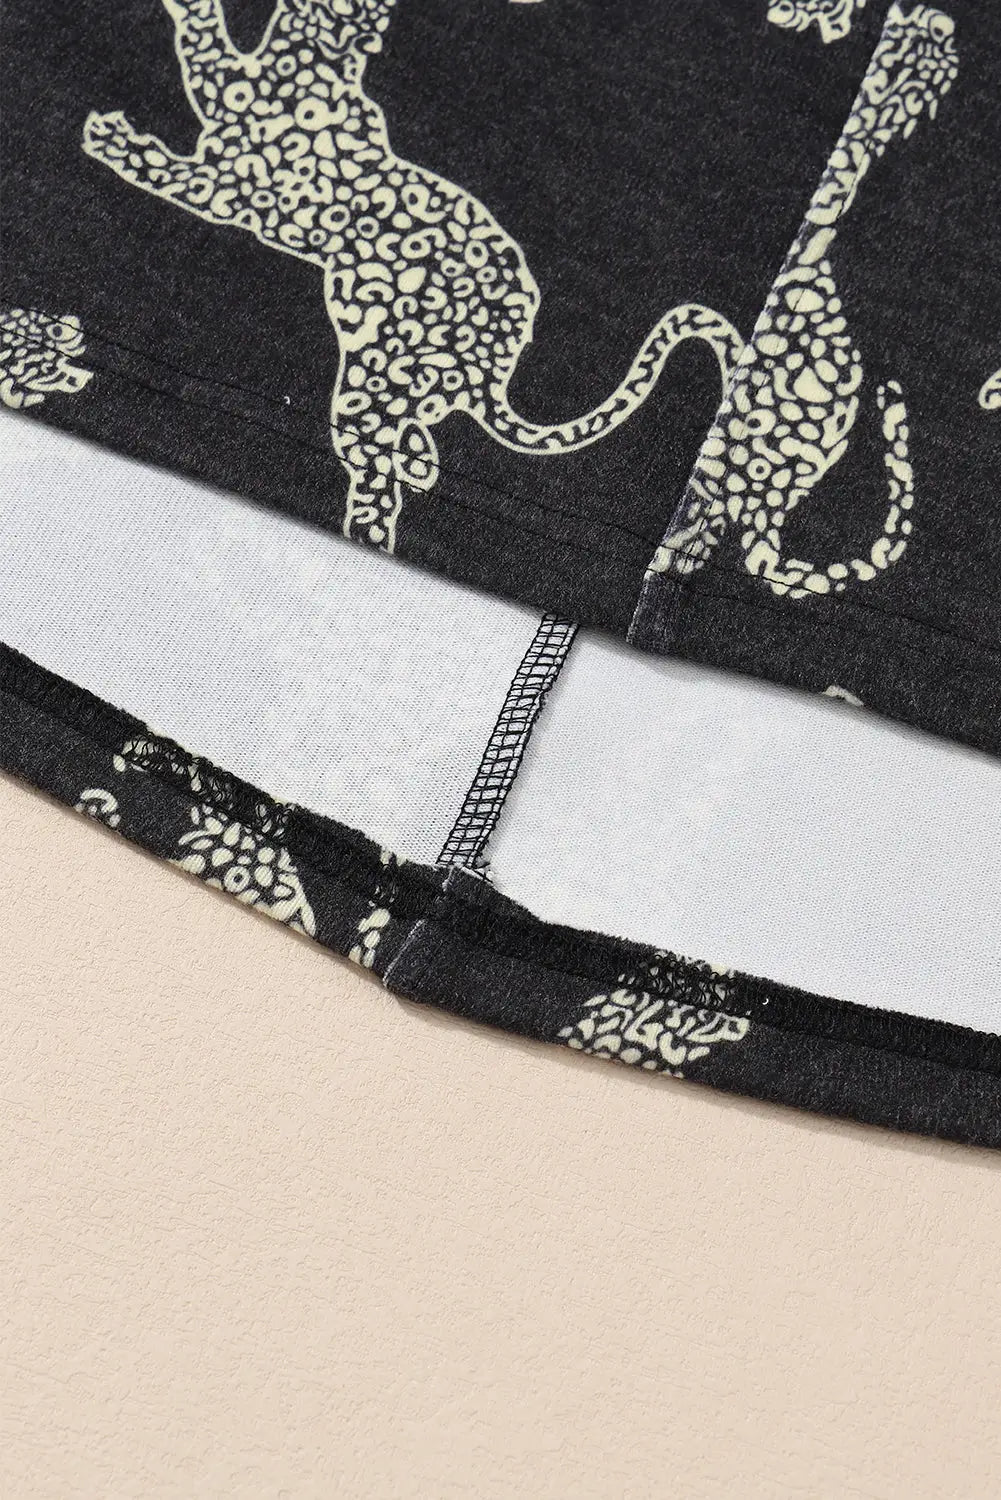 Black lively cheetah print long sleeve top - tops